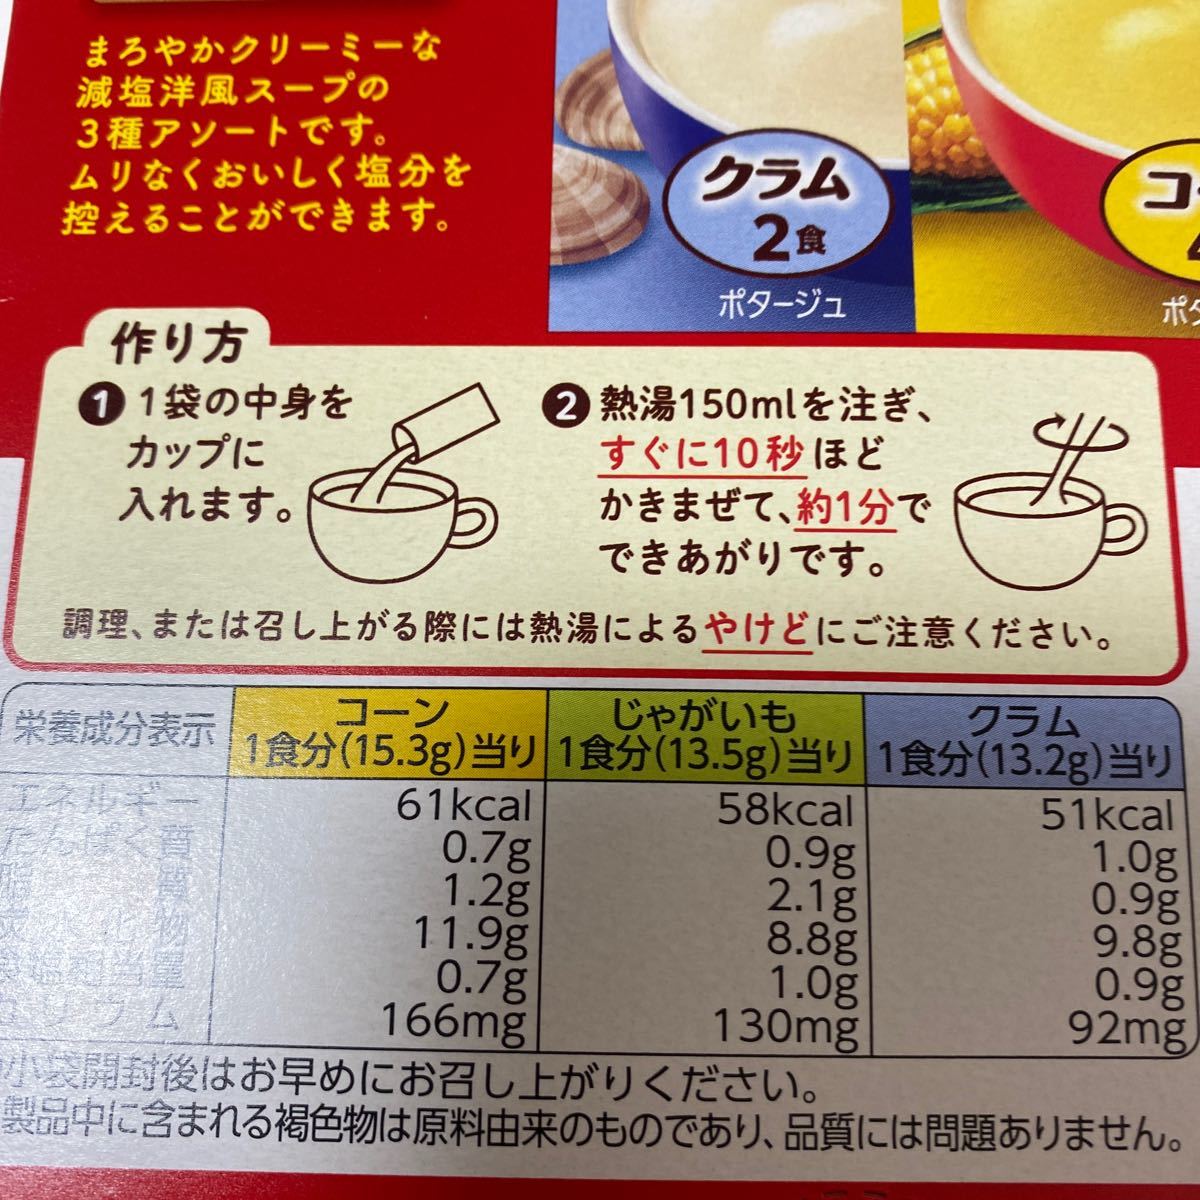 poka Sapporo hood & viva reji... soup . salt 3 kind assortment 8 sack go in best-before date 2025*03